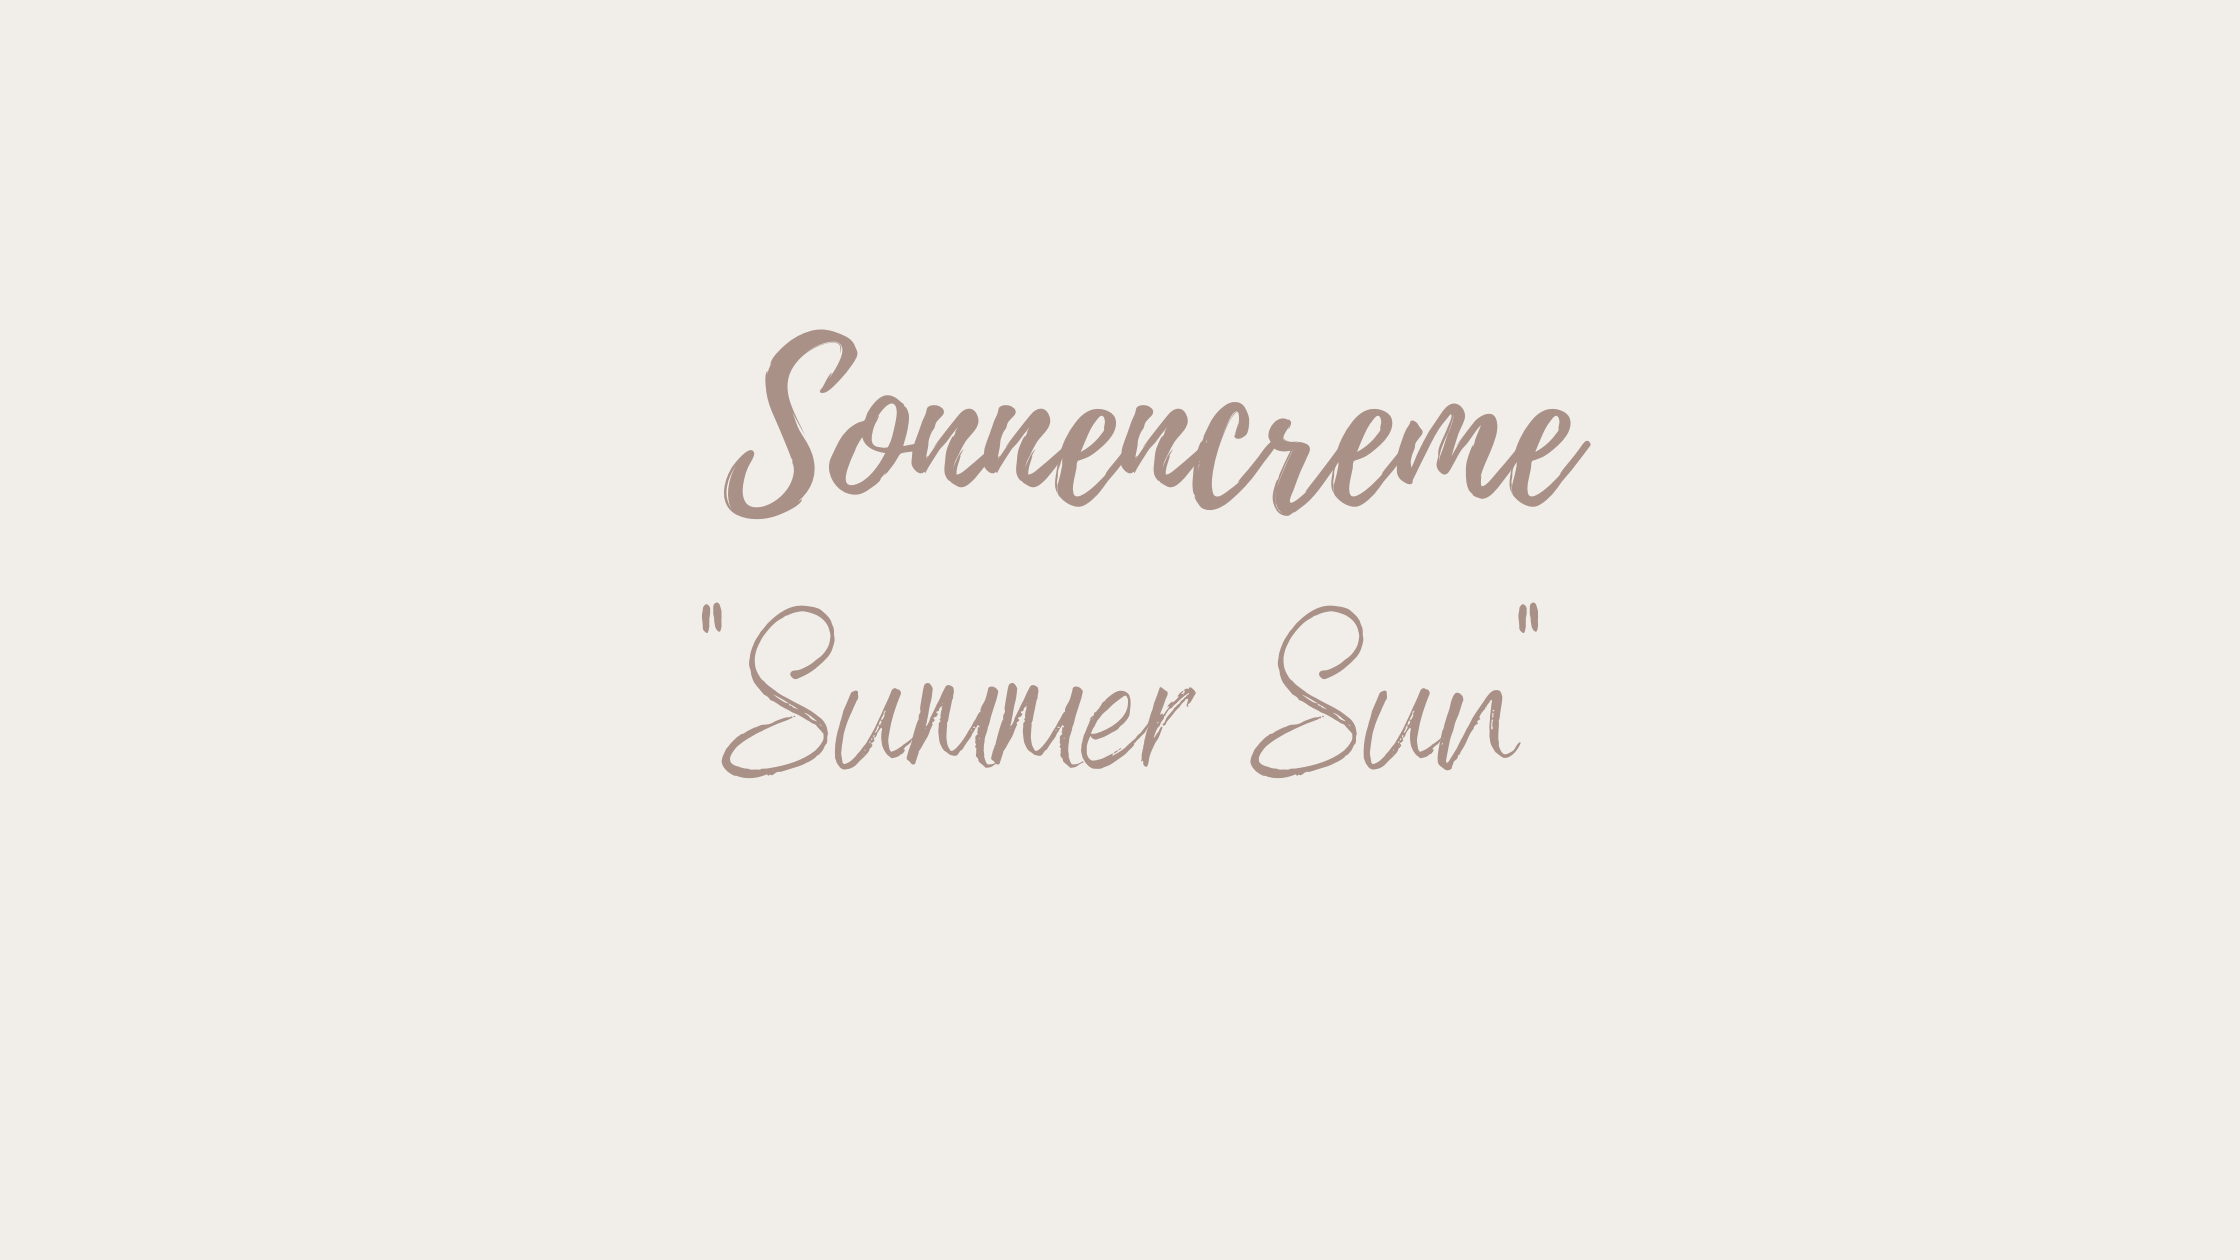 innometics-sonnencreme-summer-sun